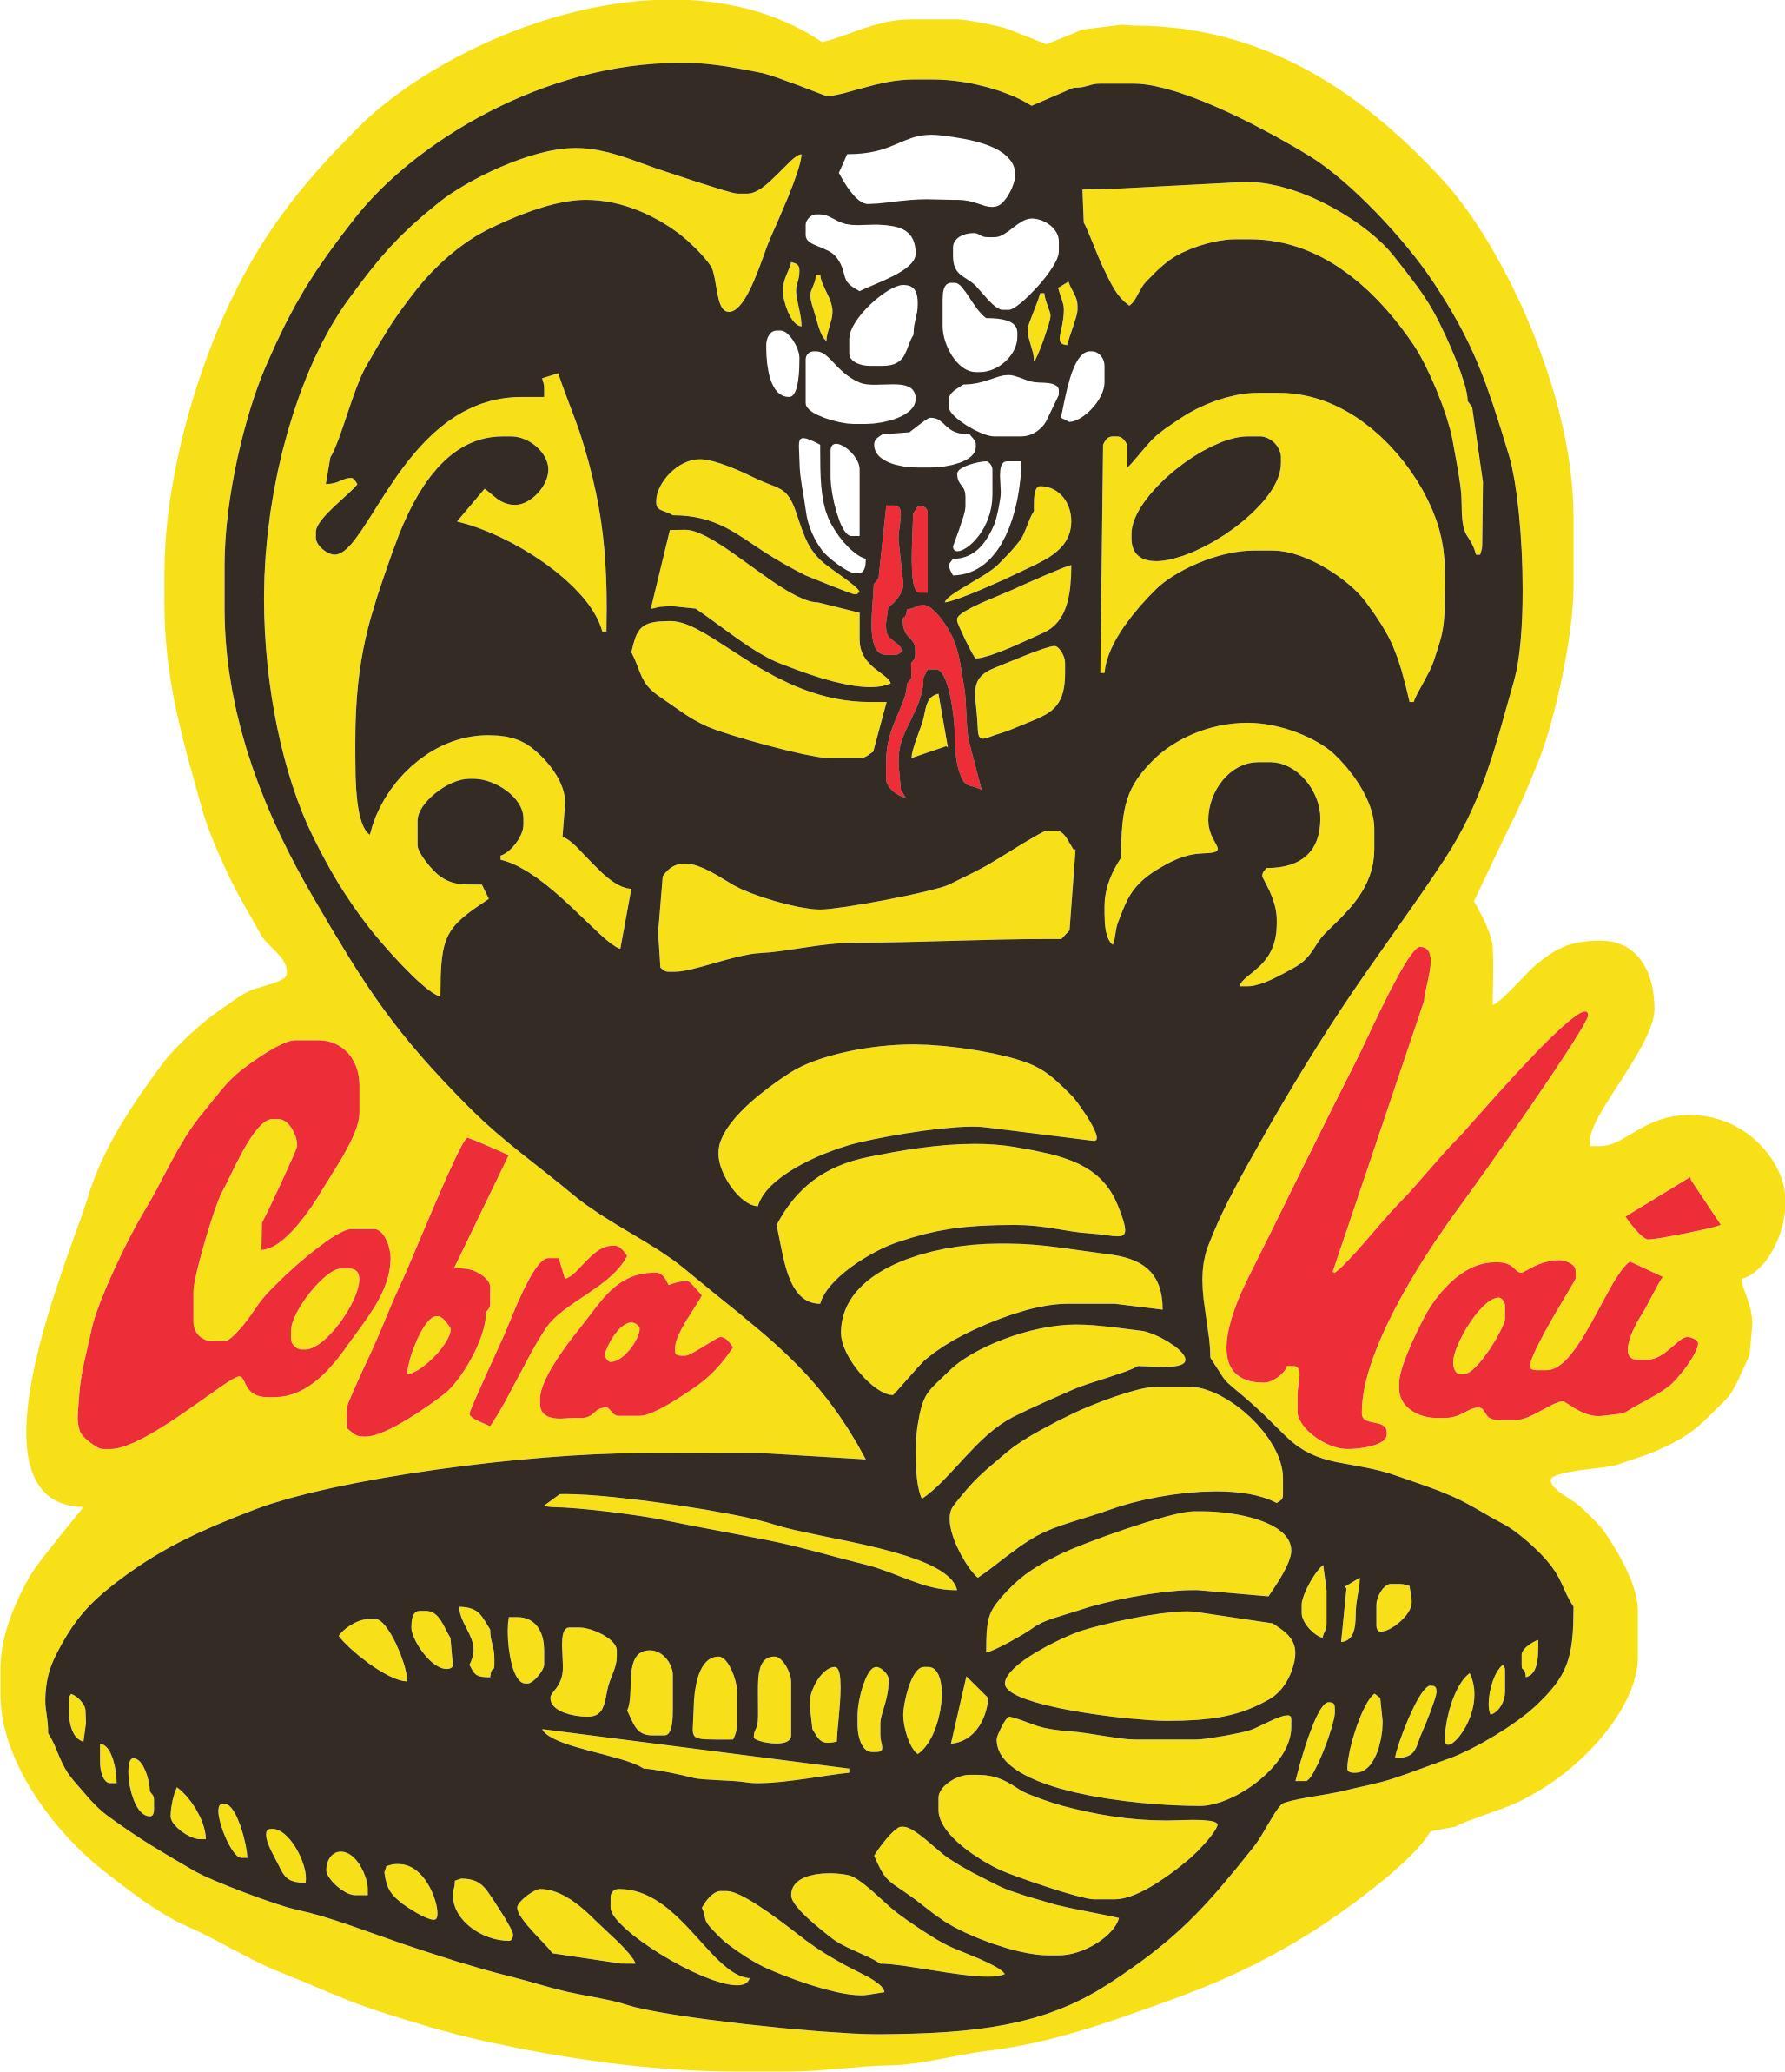 Cobra Kai (TV Series 2018– )